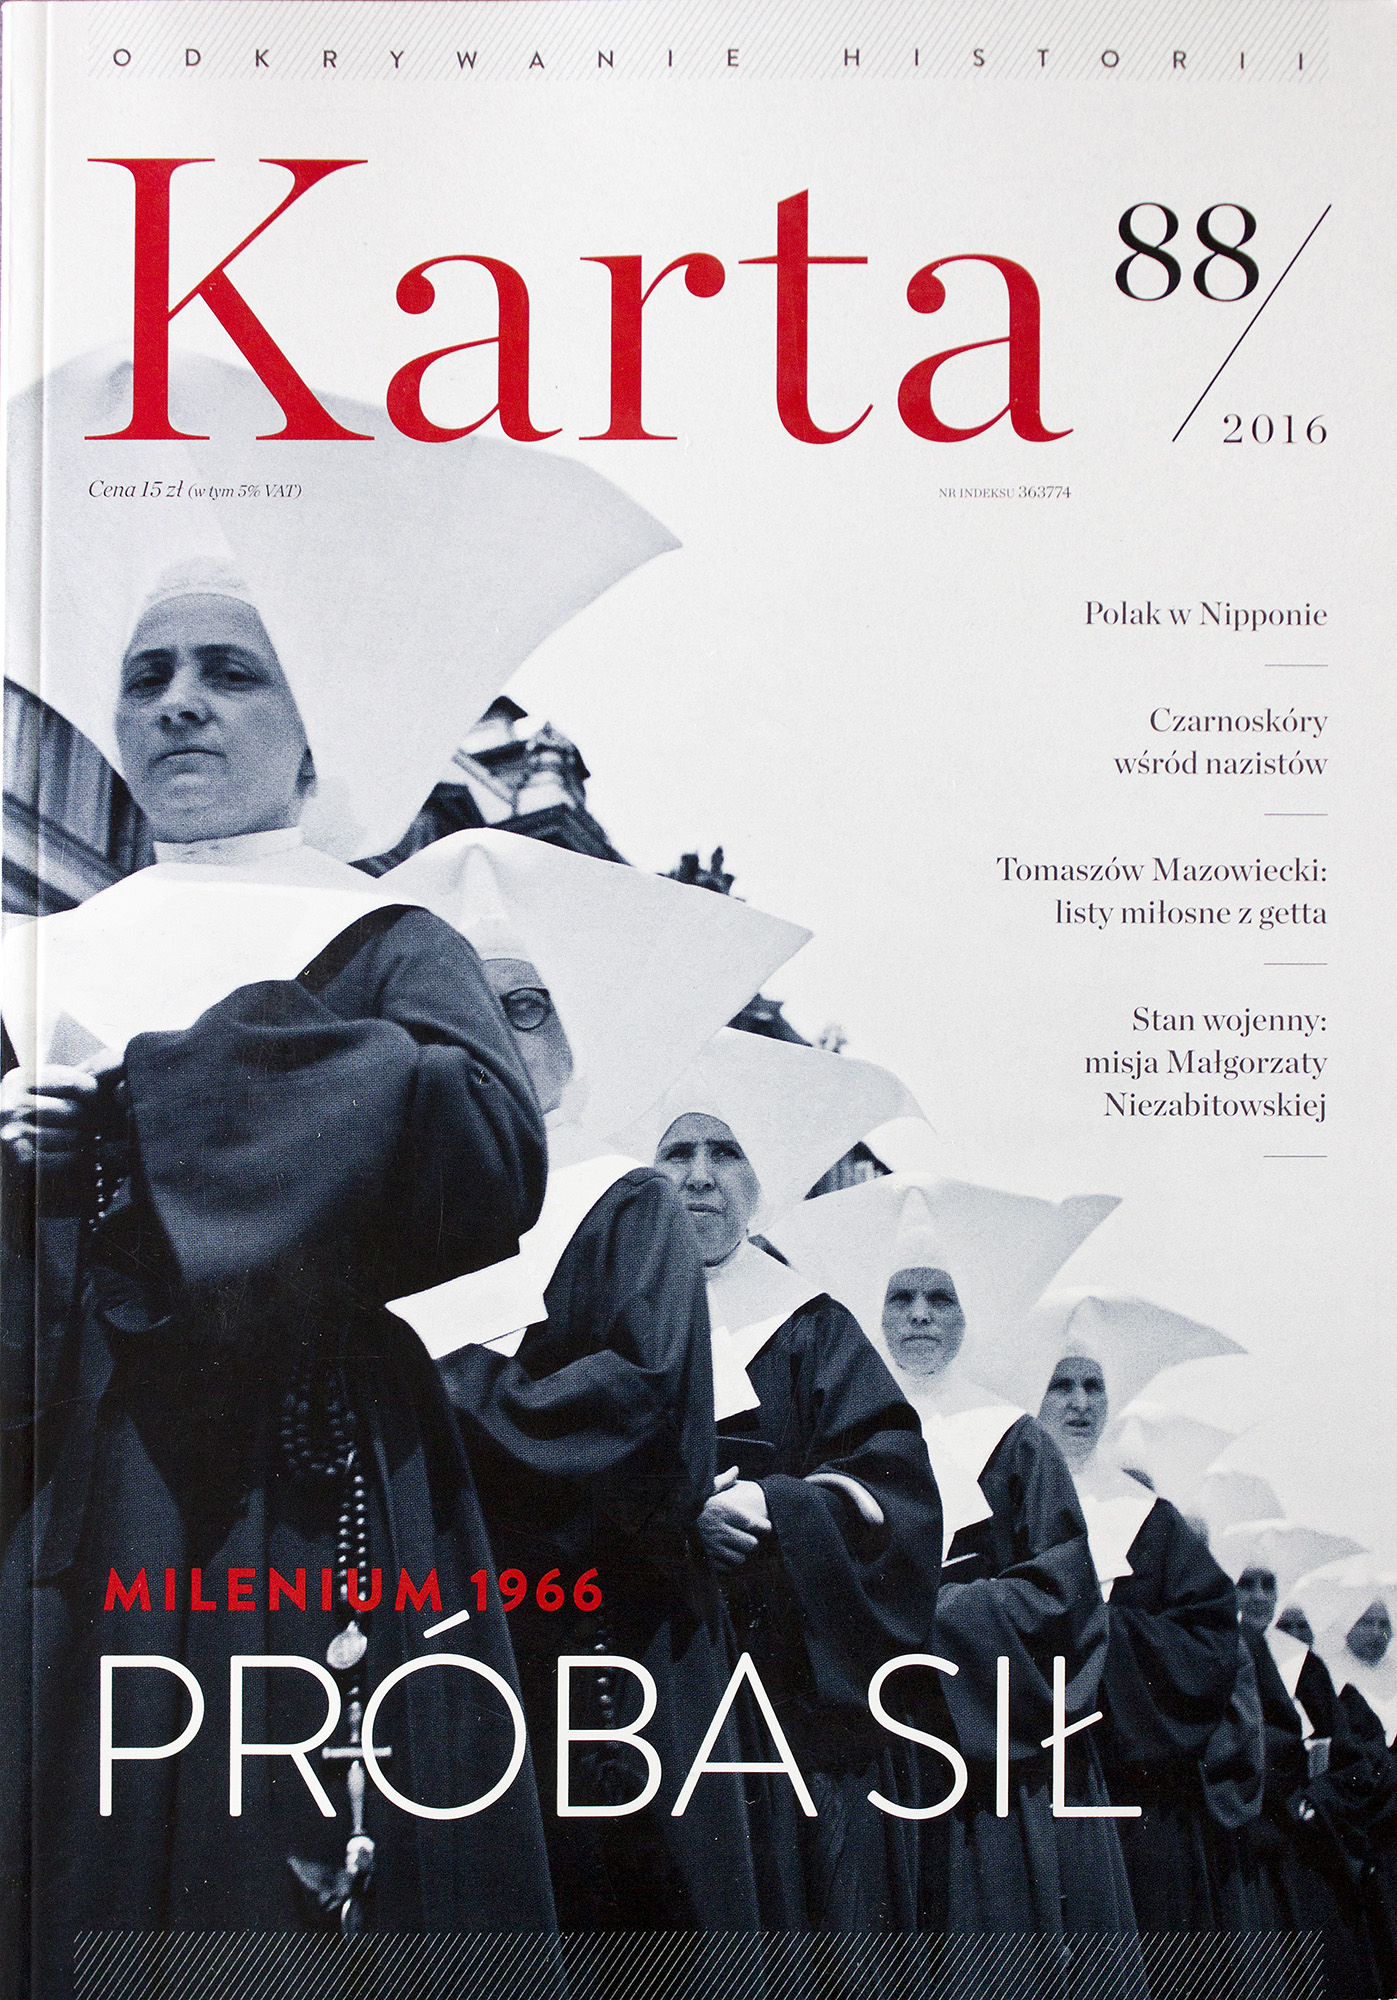  KARTA magazine no. 88/2016